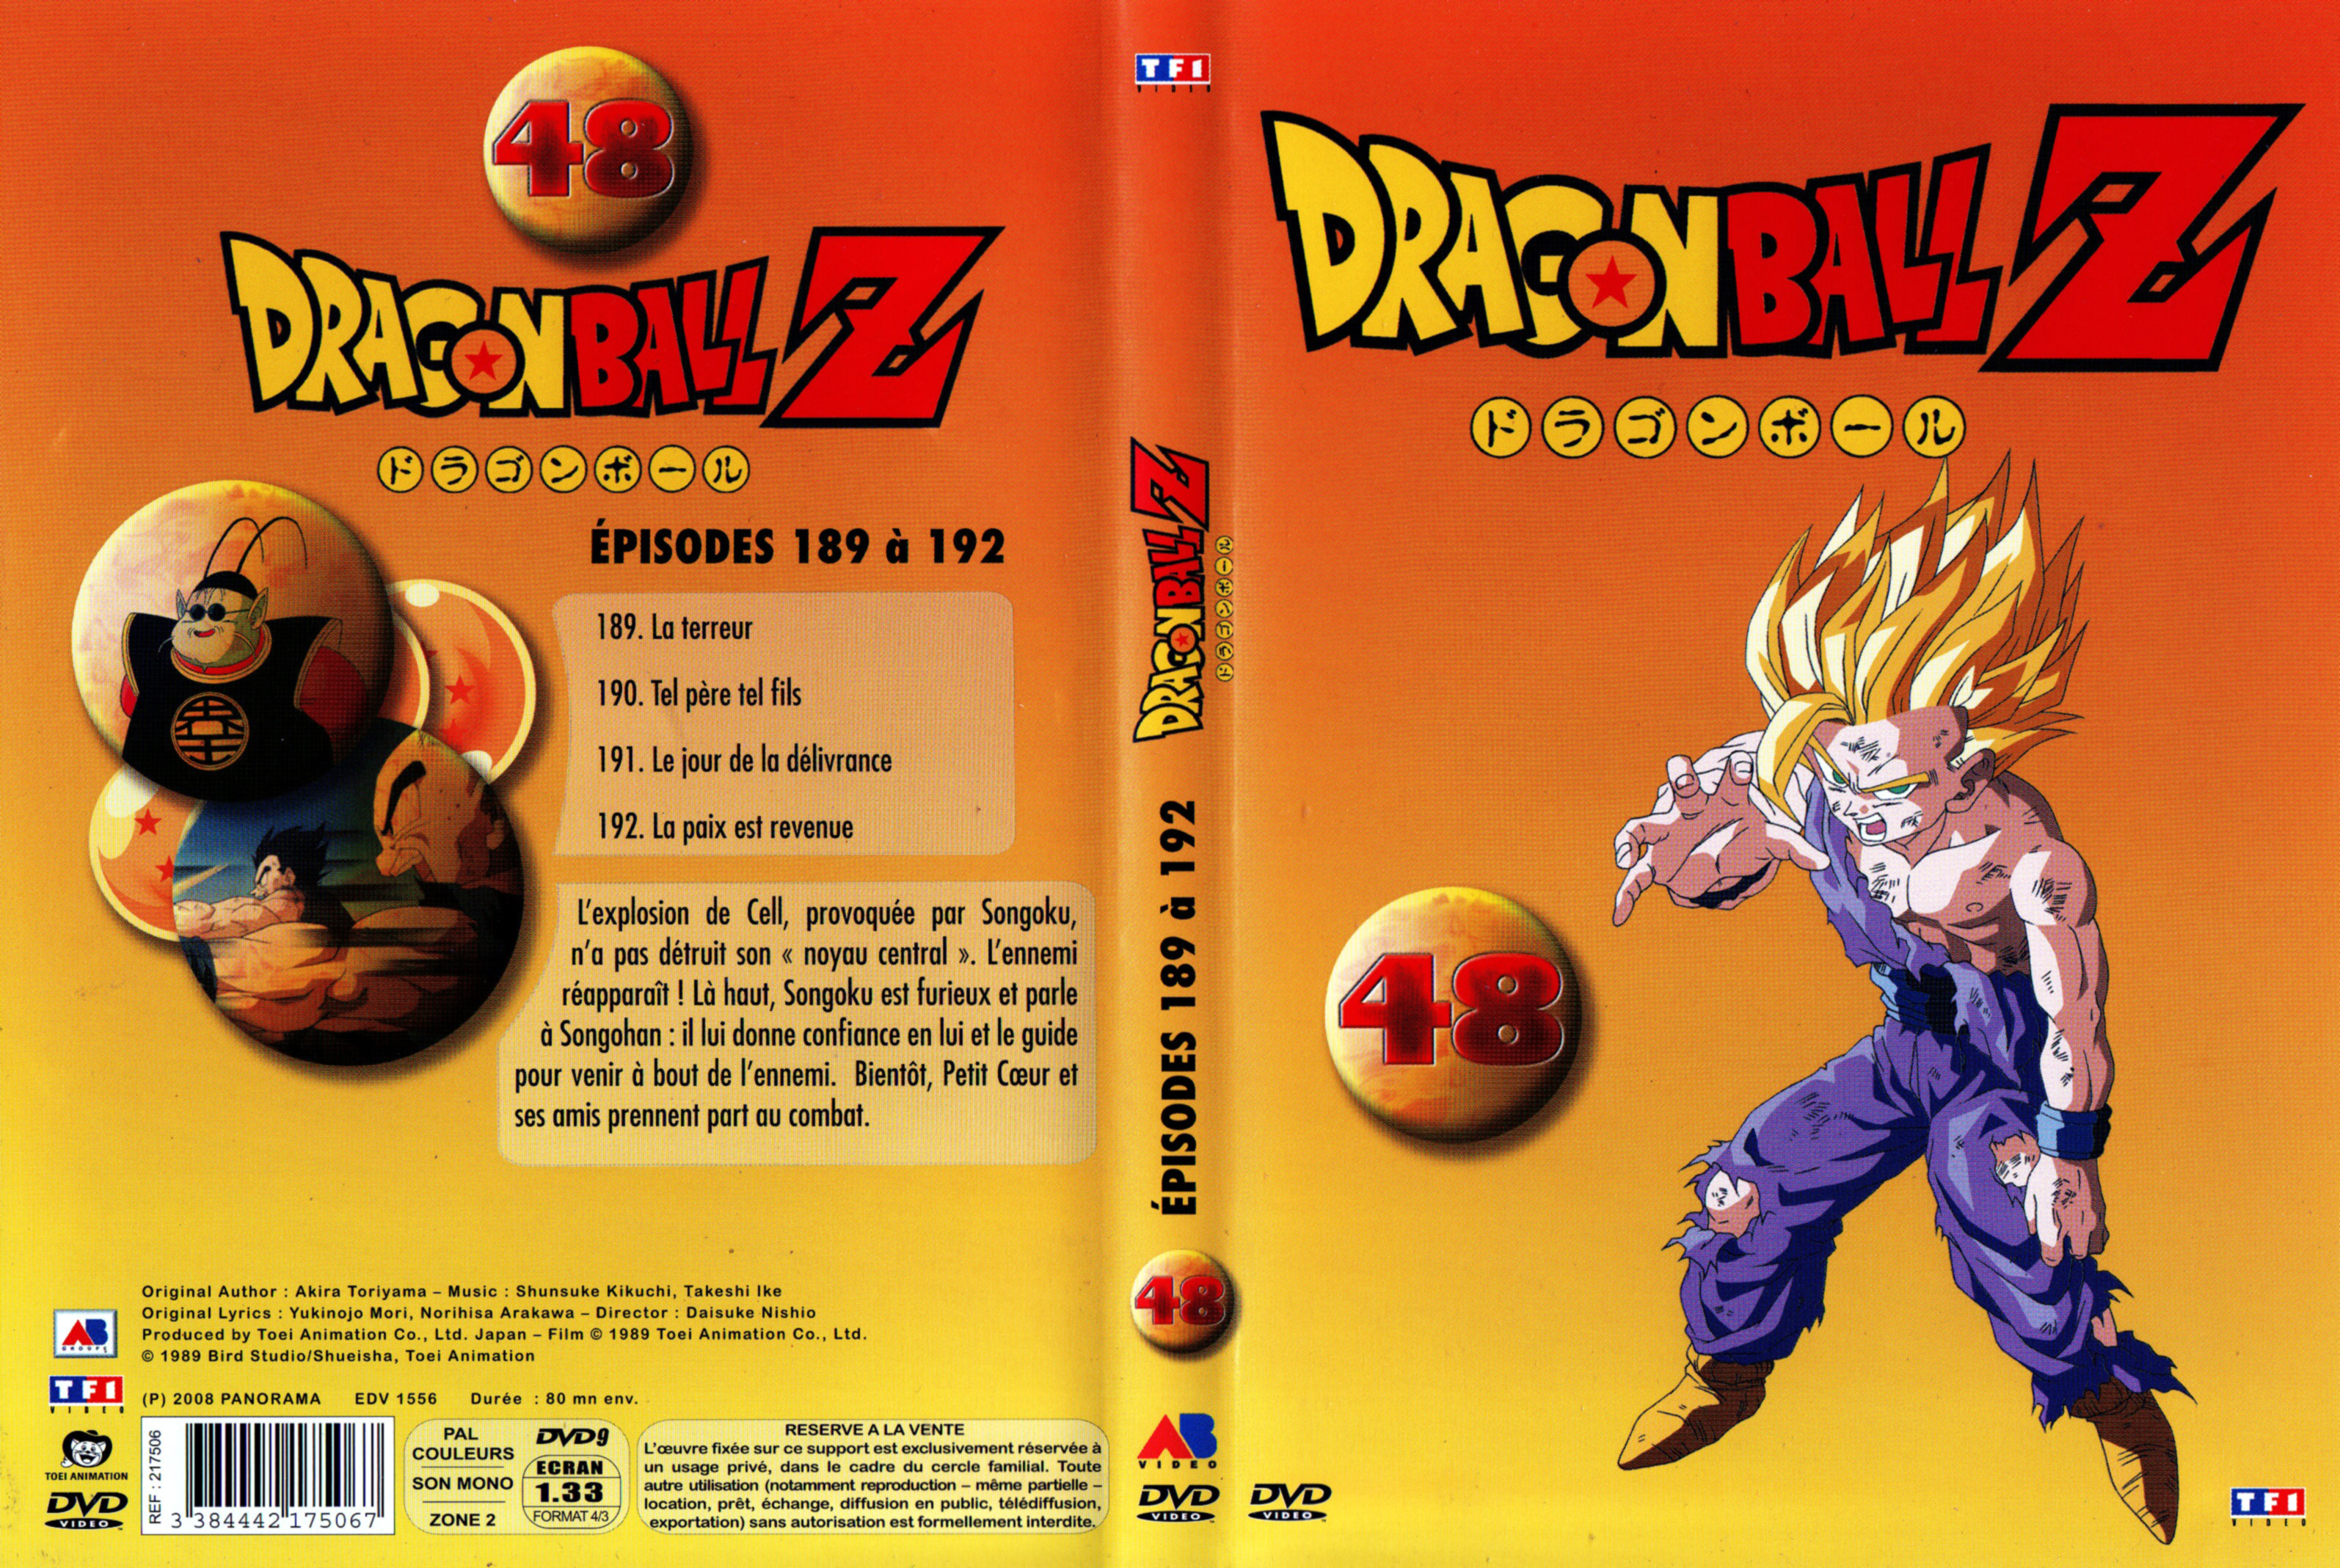 Jaquette DVD Dragon Ball Z vol 48